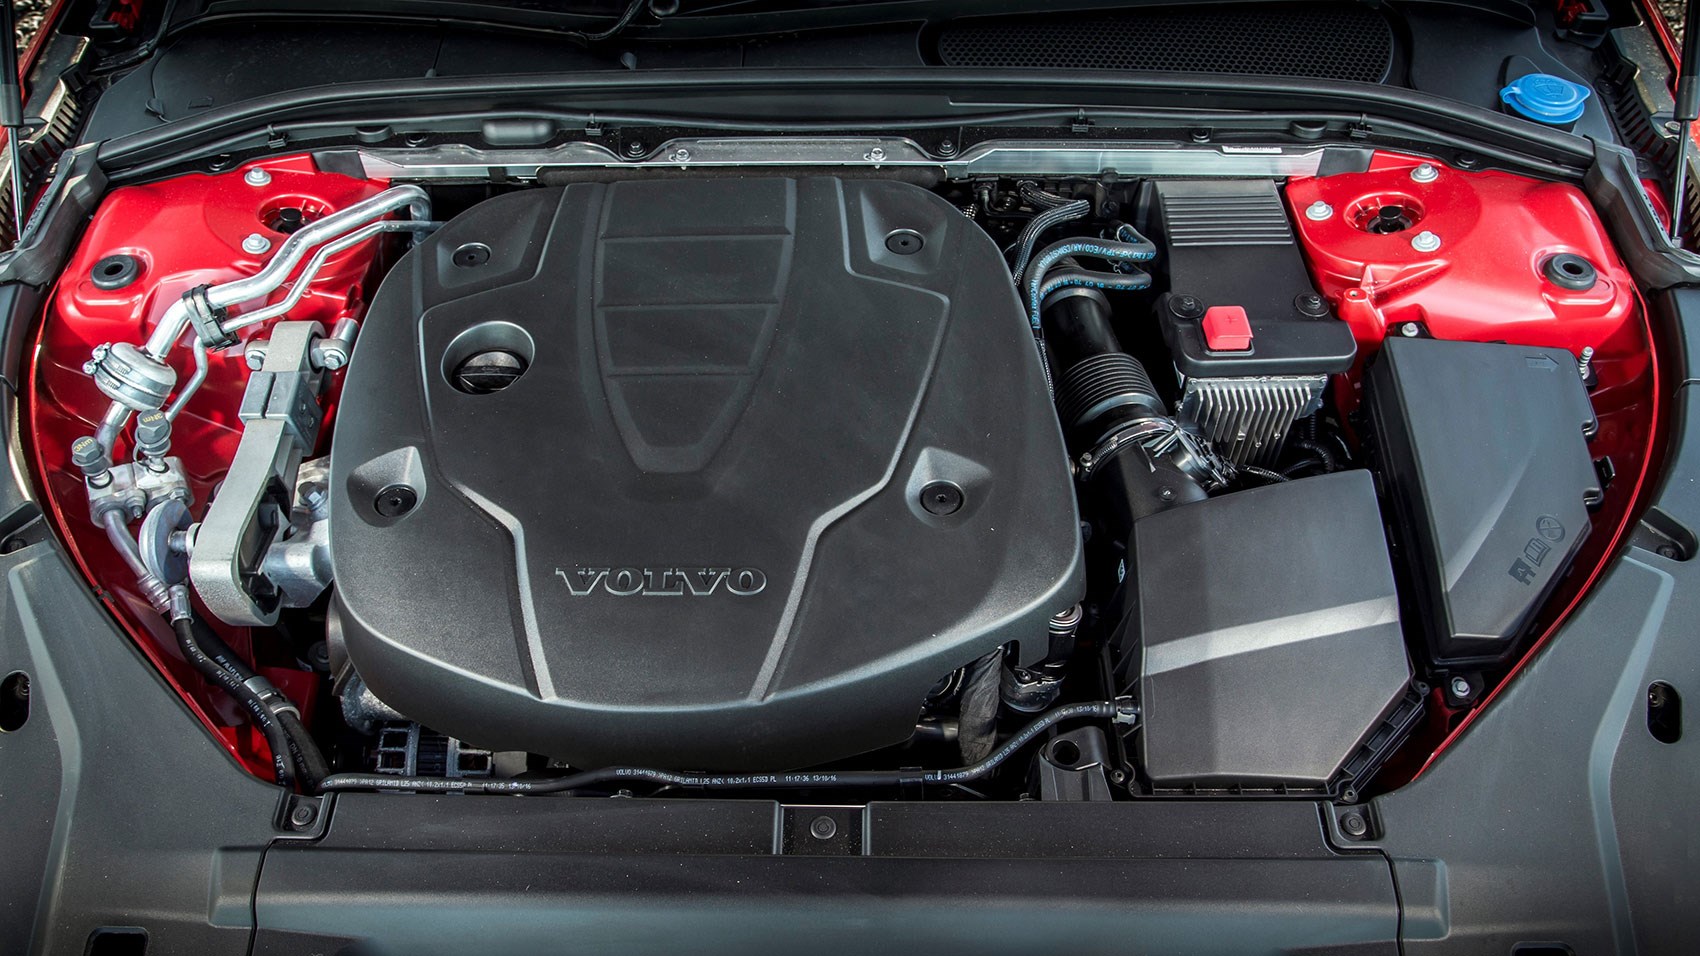 Volvo S90 D5 engine